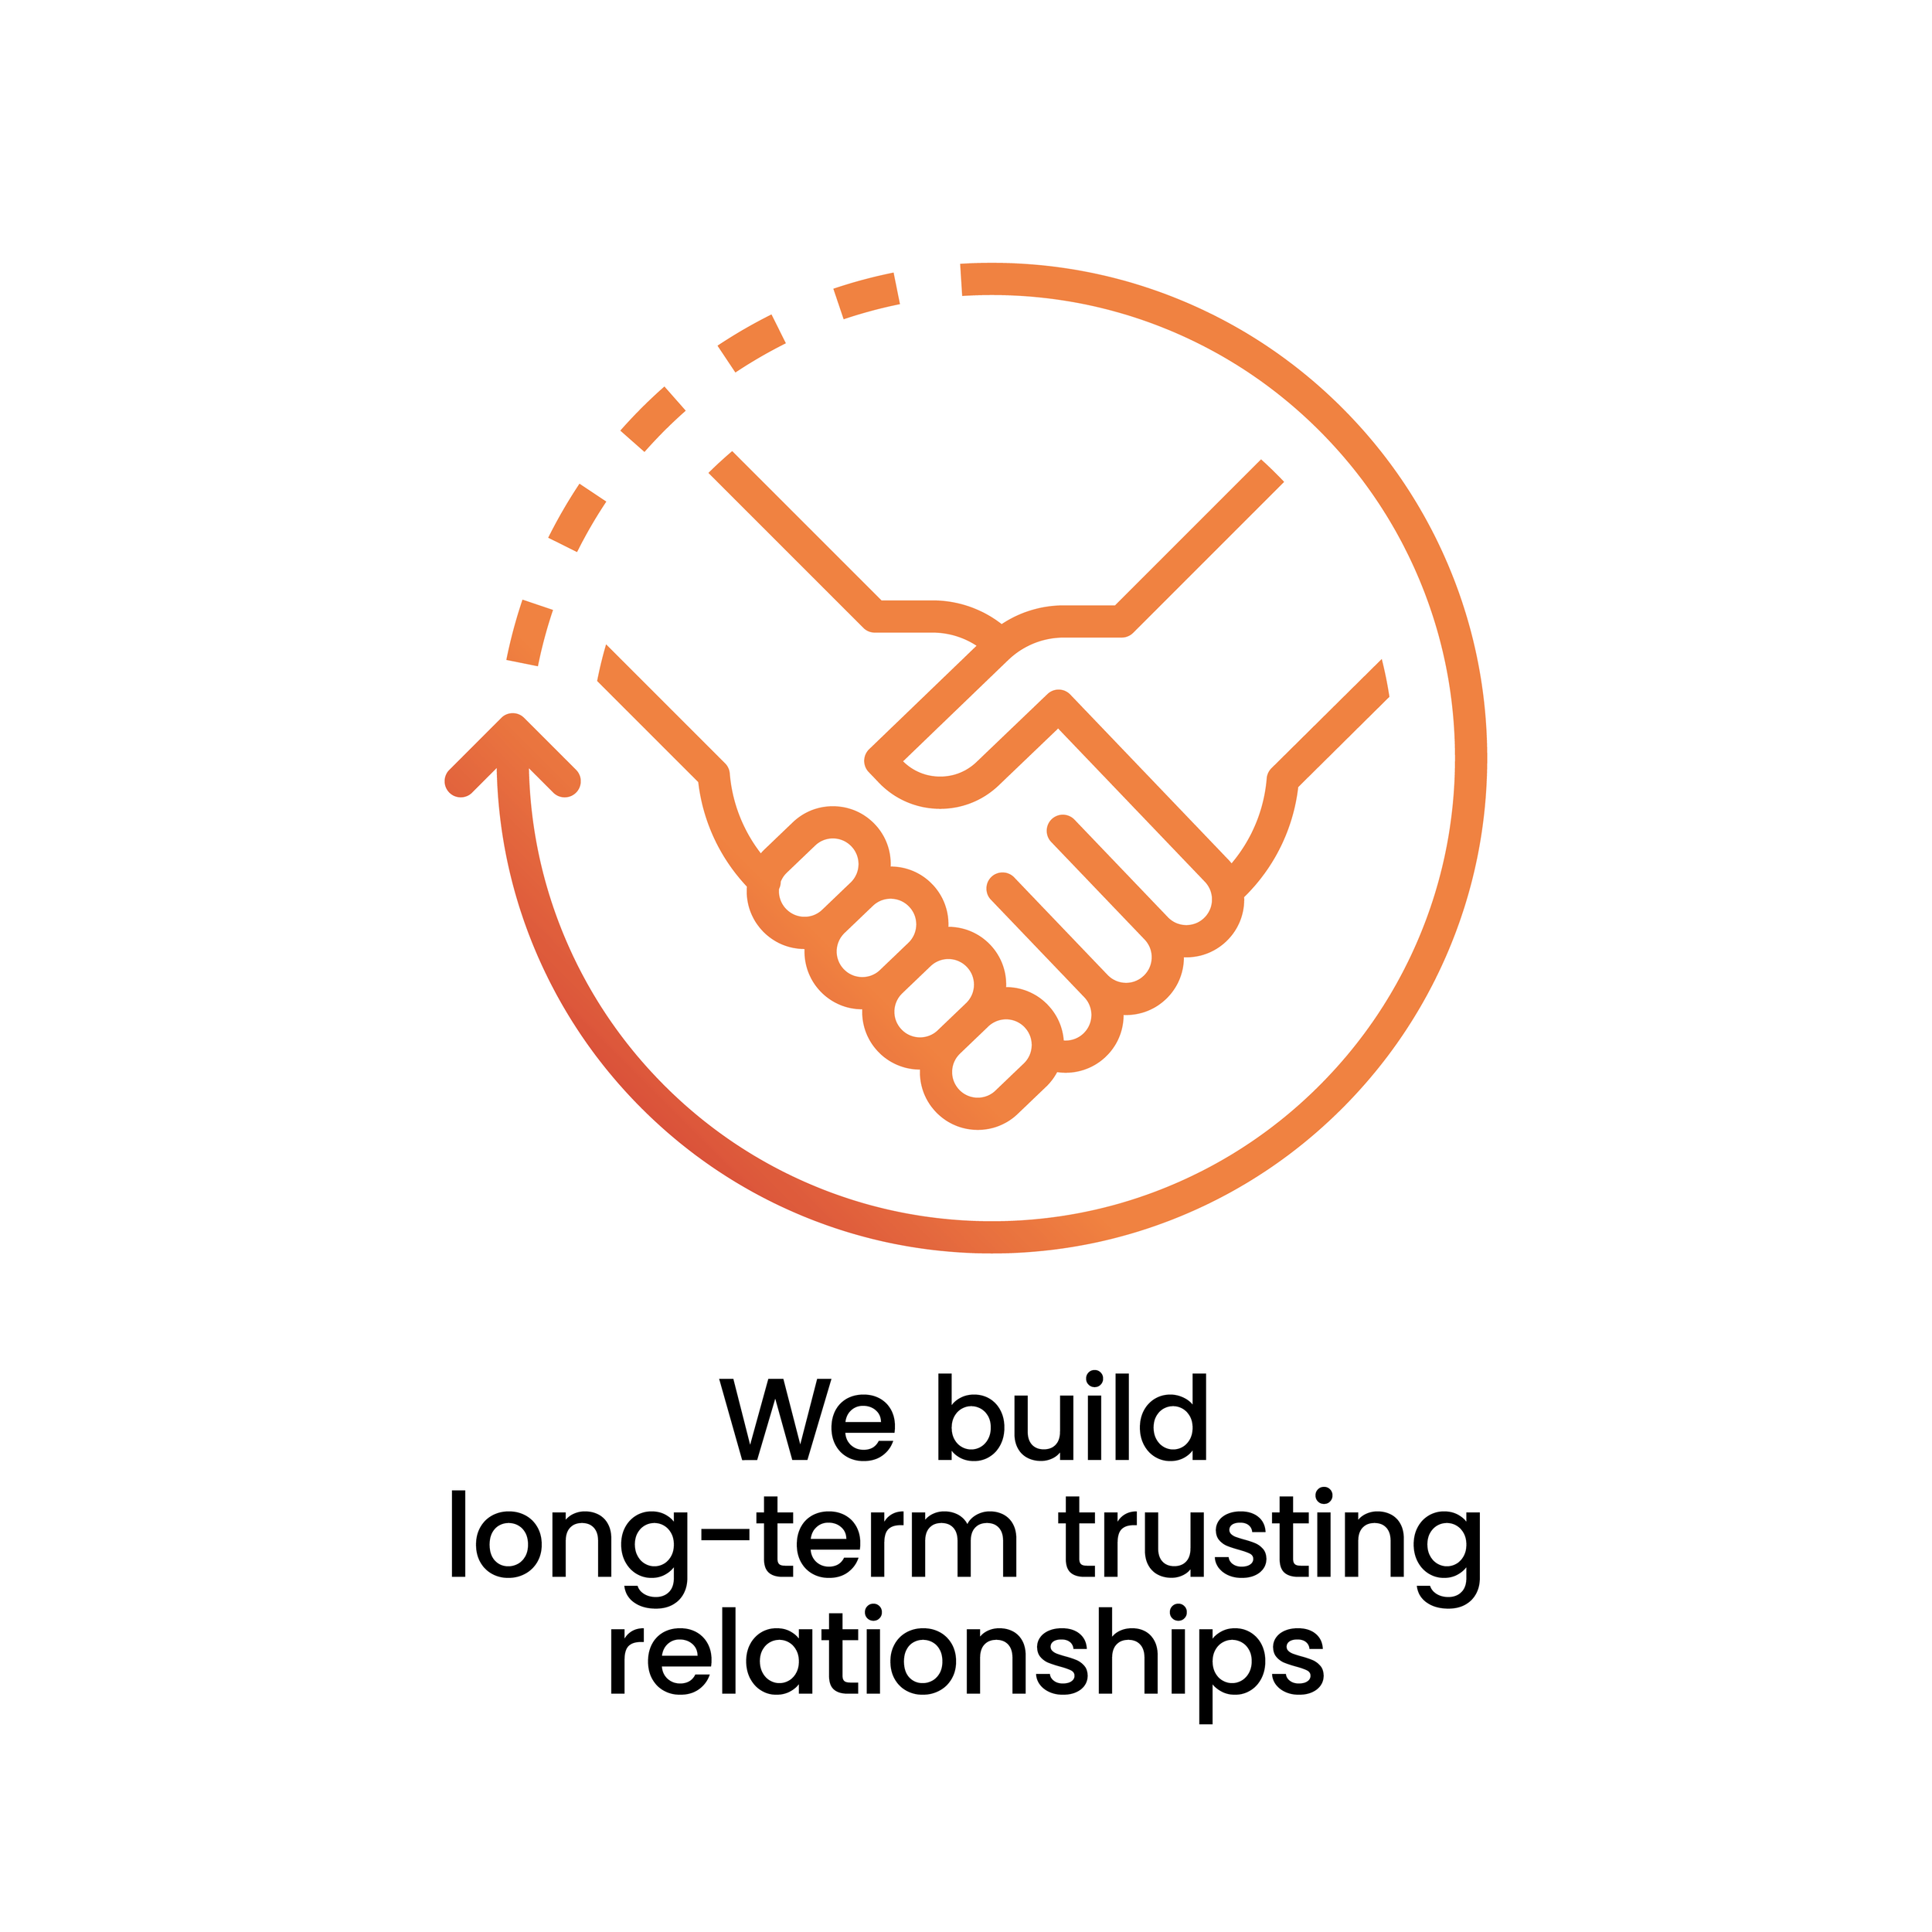 We build long-term trusting relationships